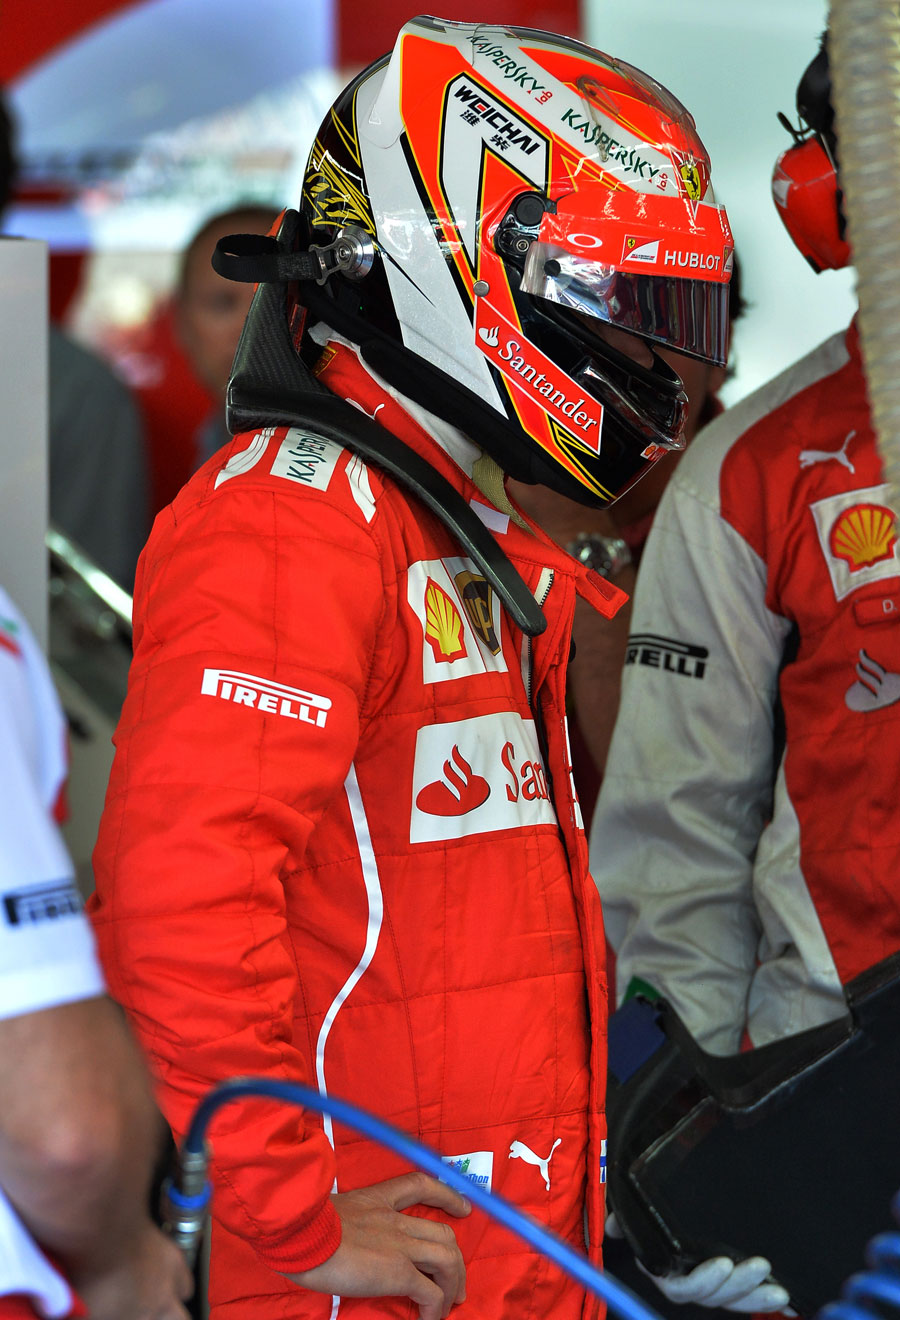 Kimi Raikkonen looks on in the Ferrari garage during qualifying